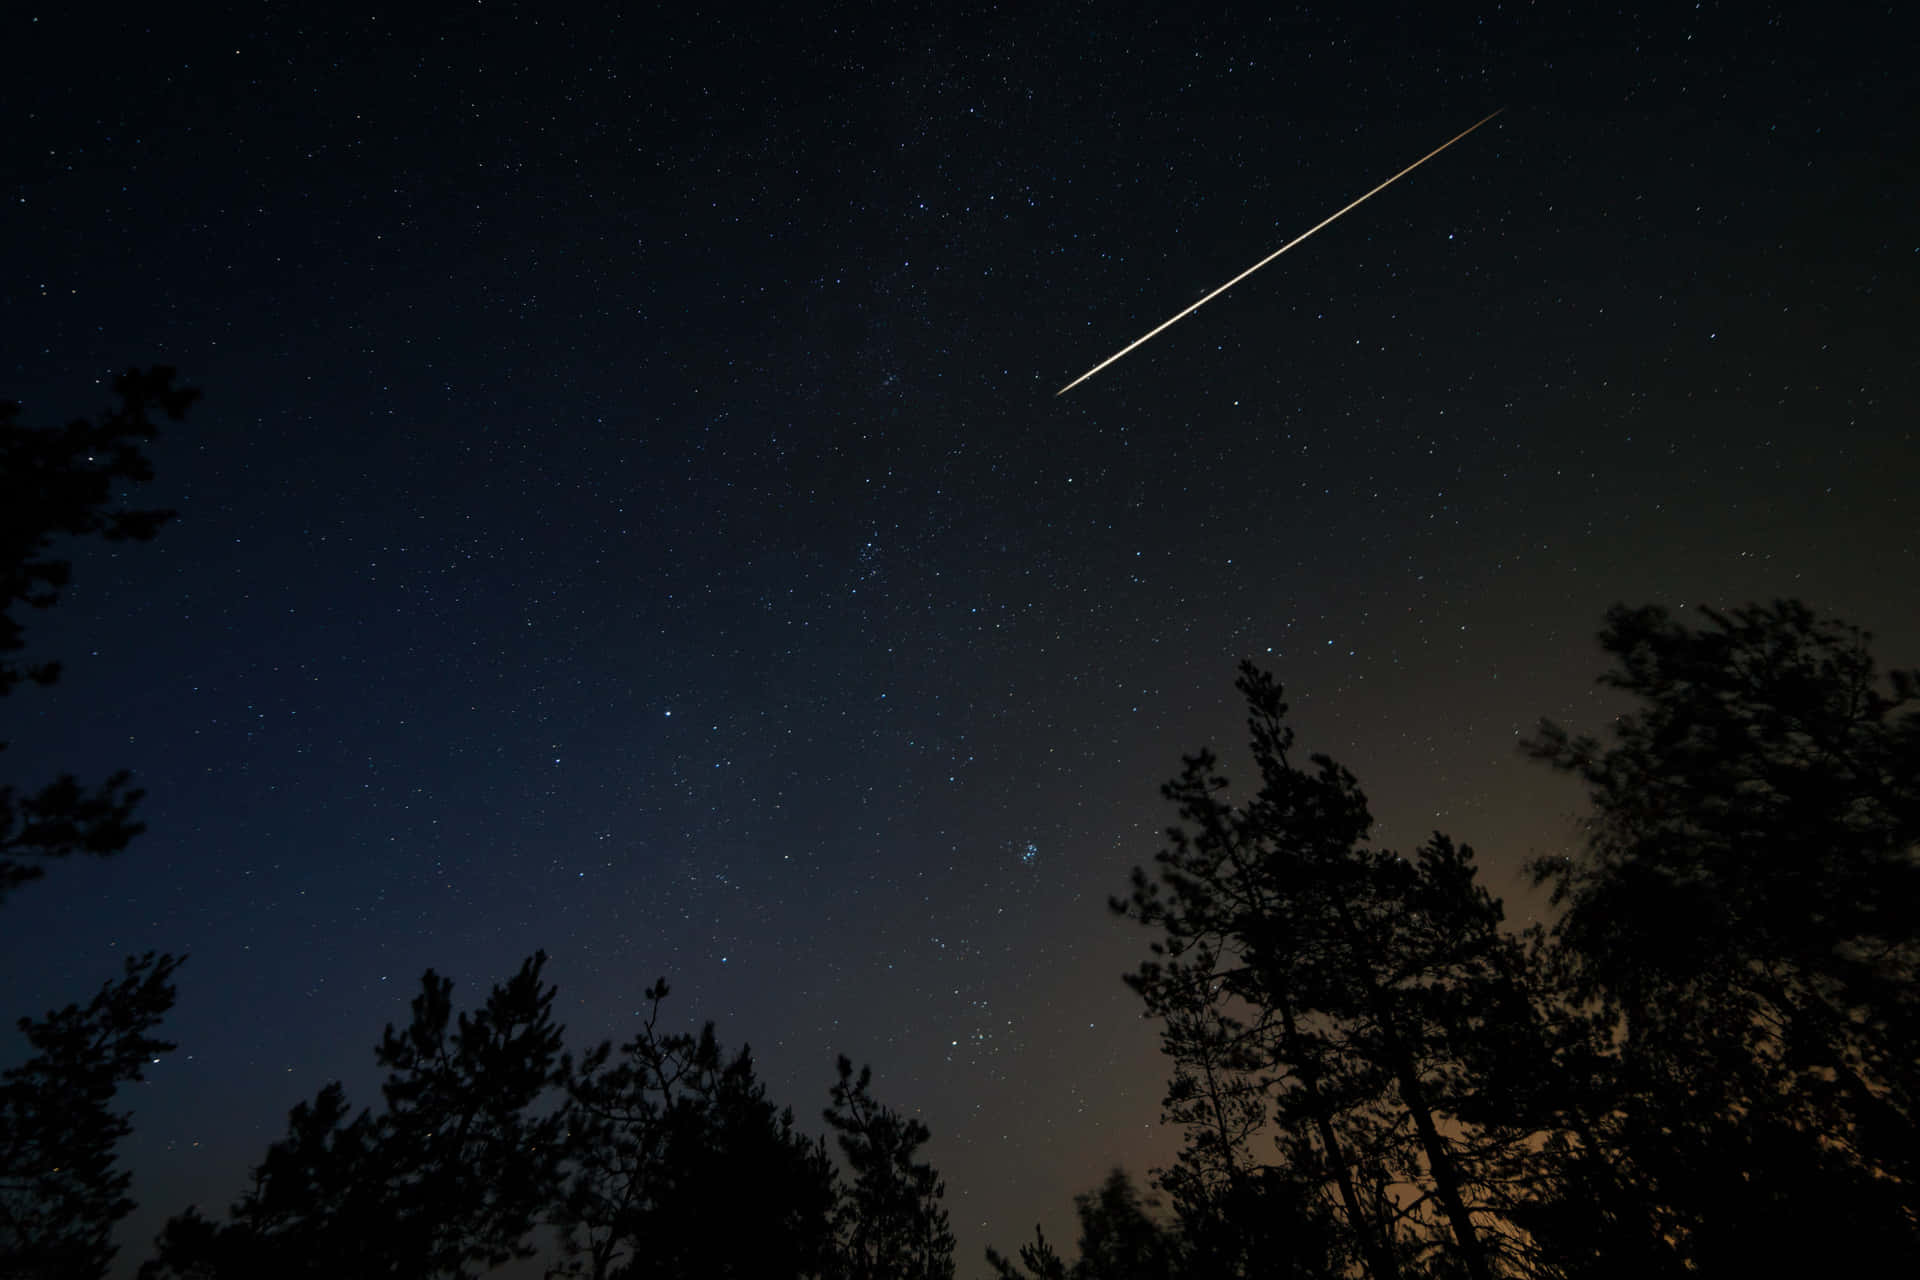 A meteor streaks through the night sky